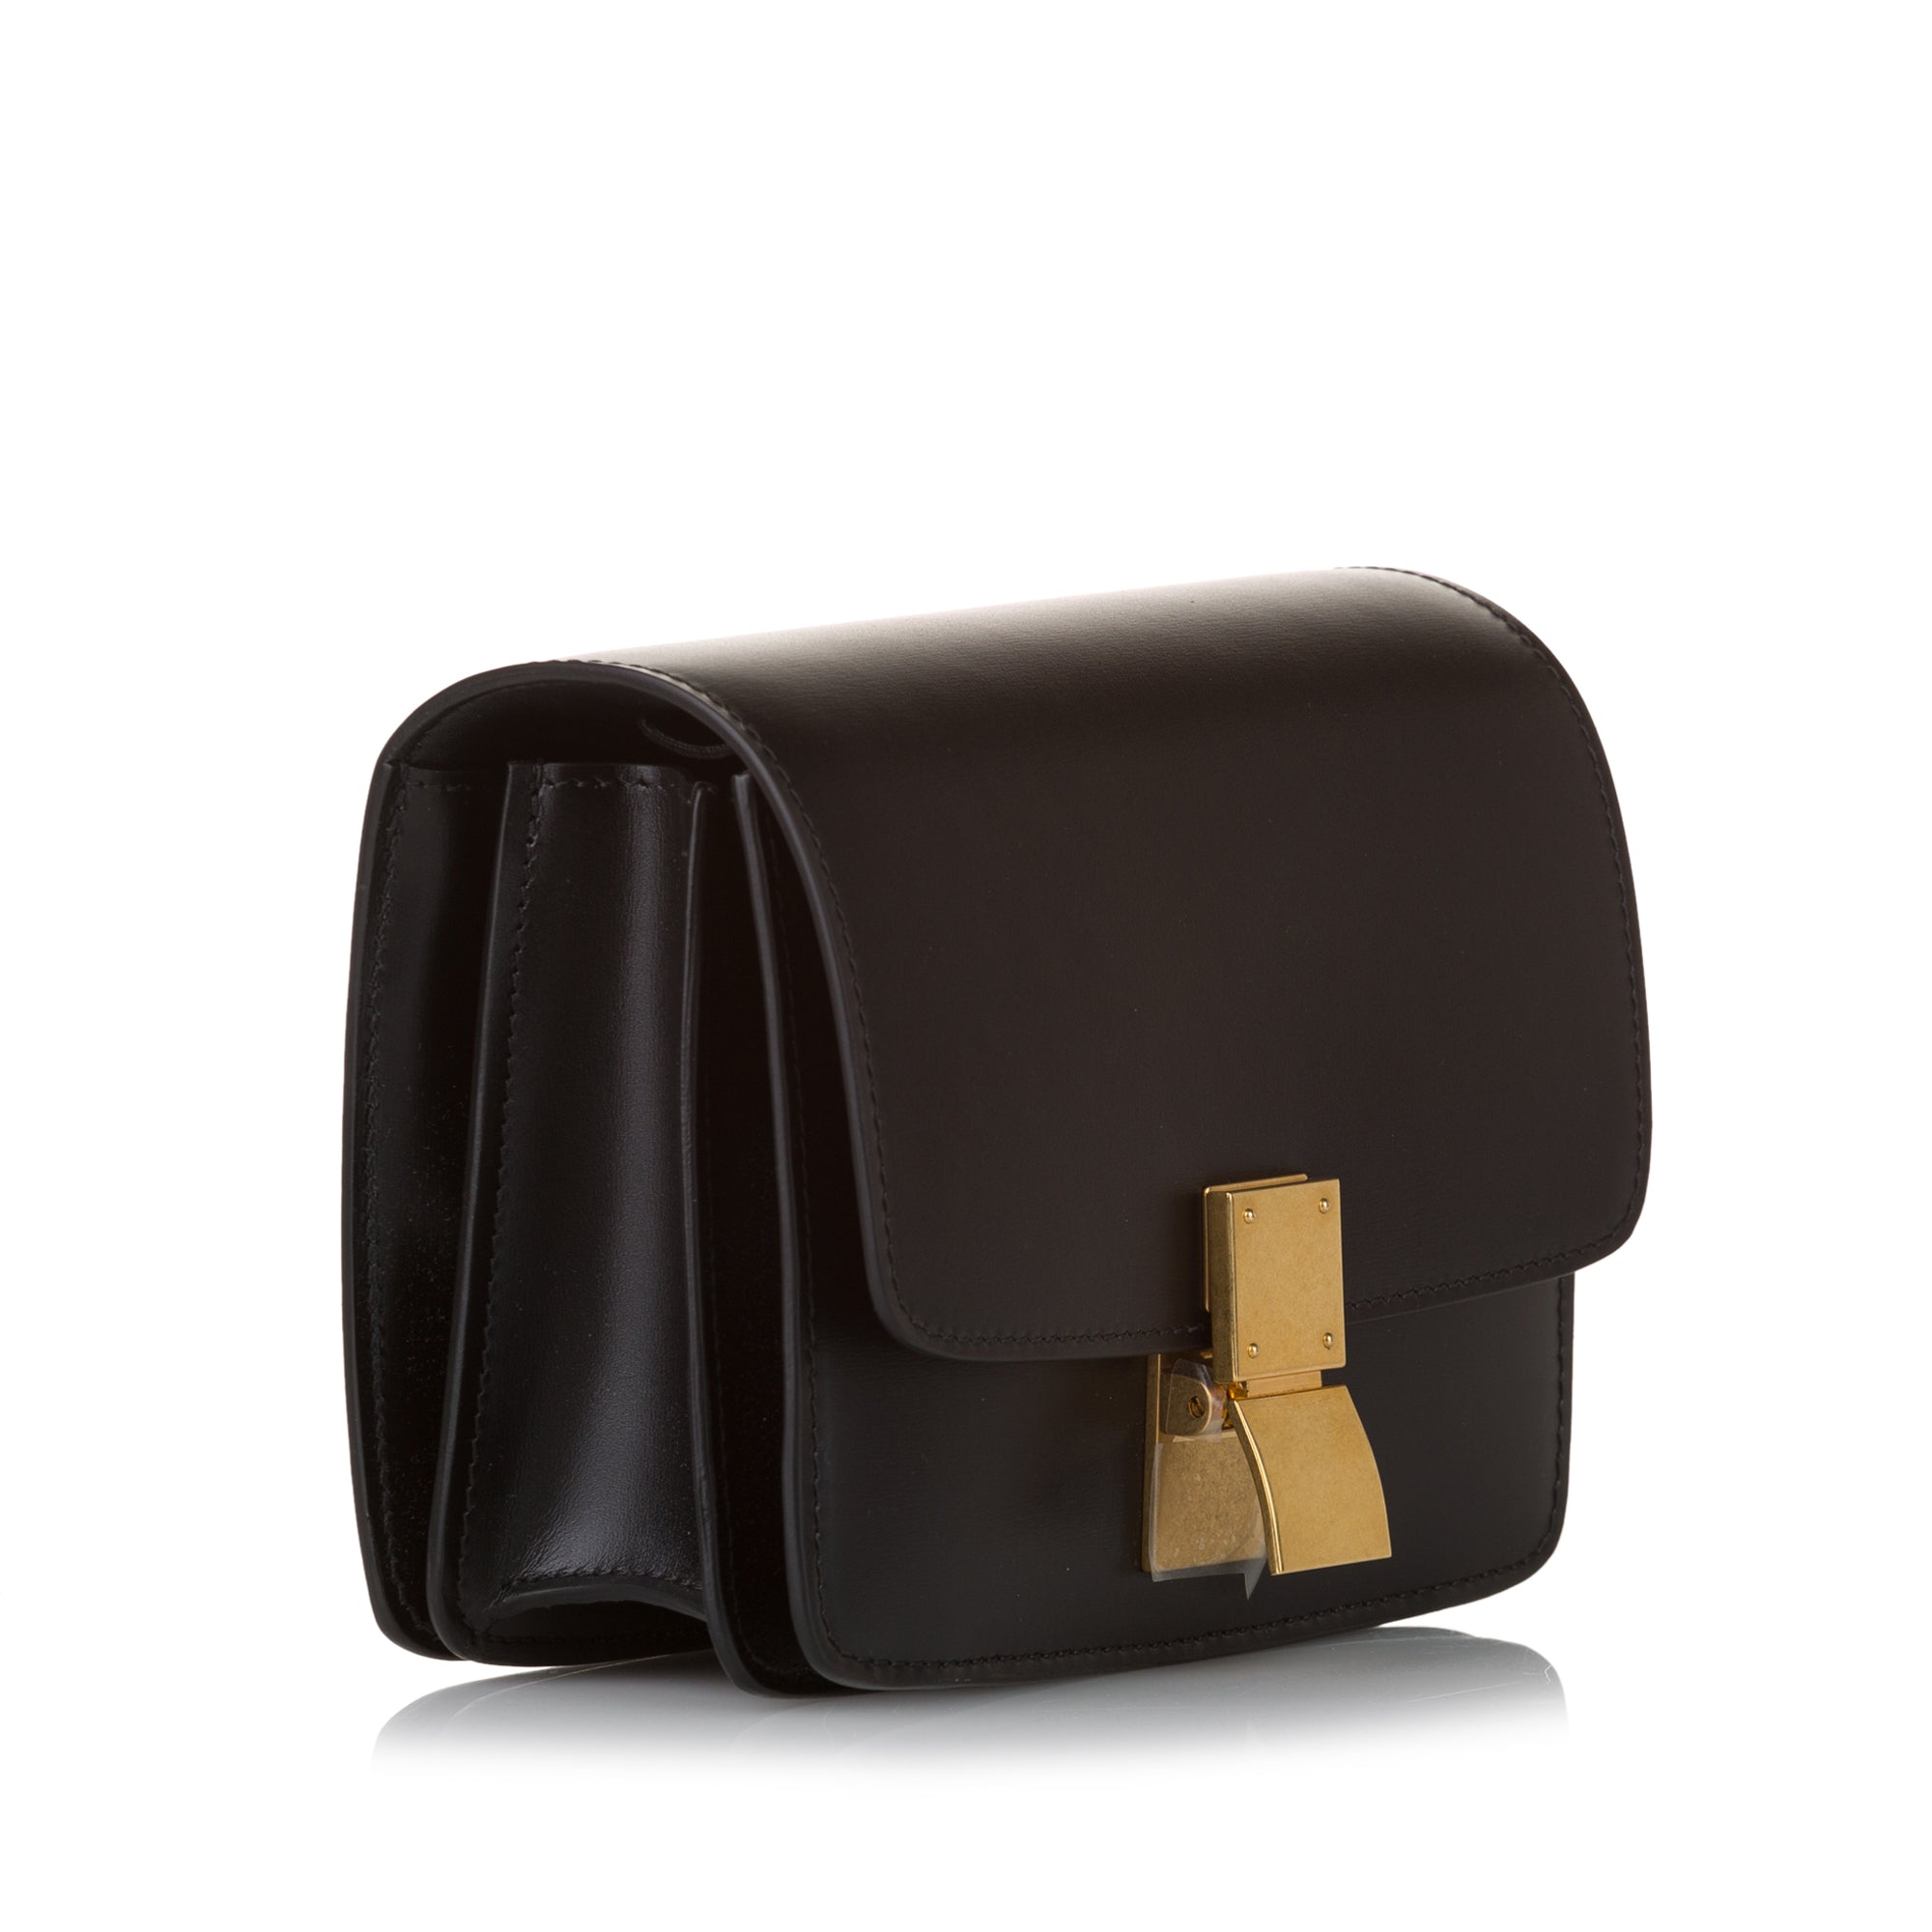 Celine Small Classic Box Leather Flap Shoulder Bag